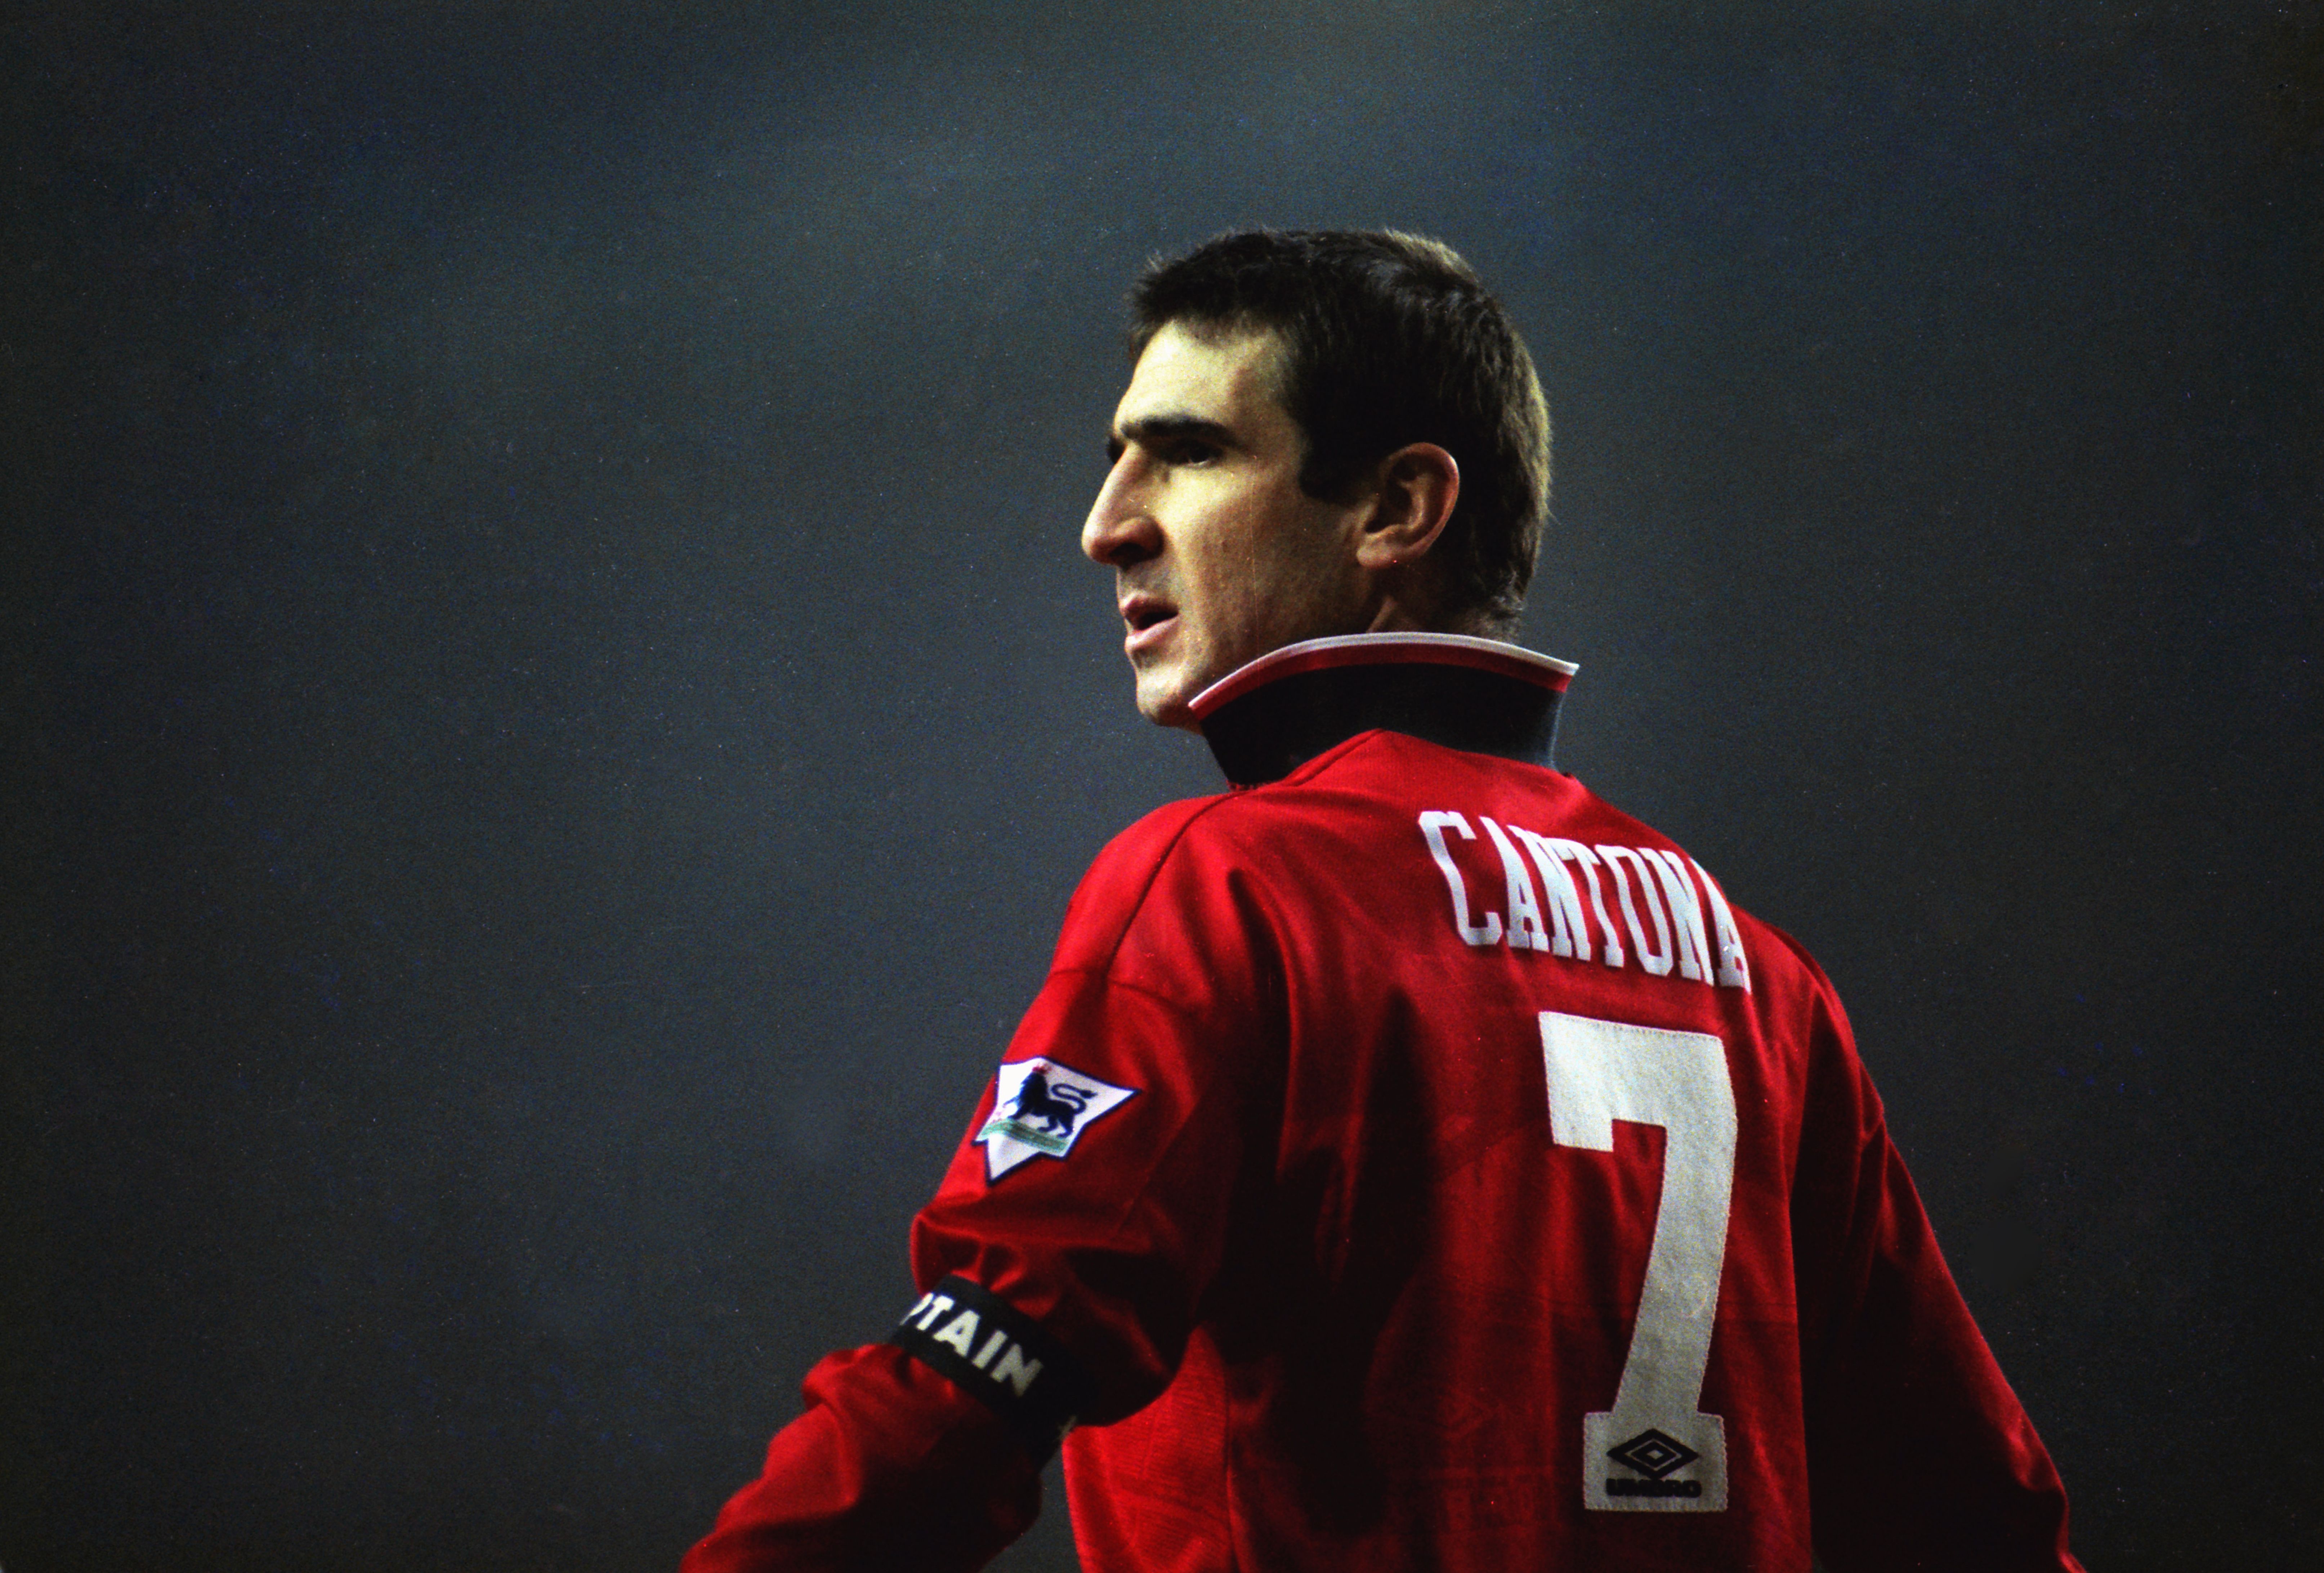 Manchester United legend Eric Cantona